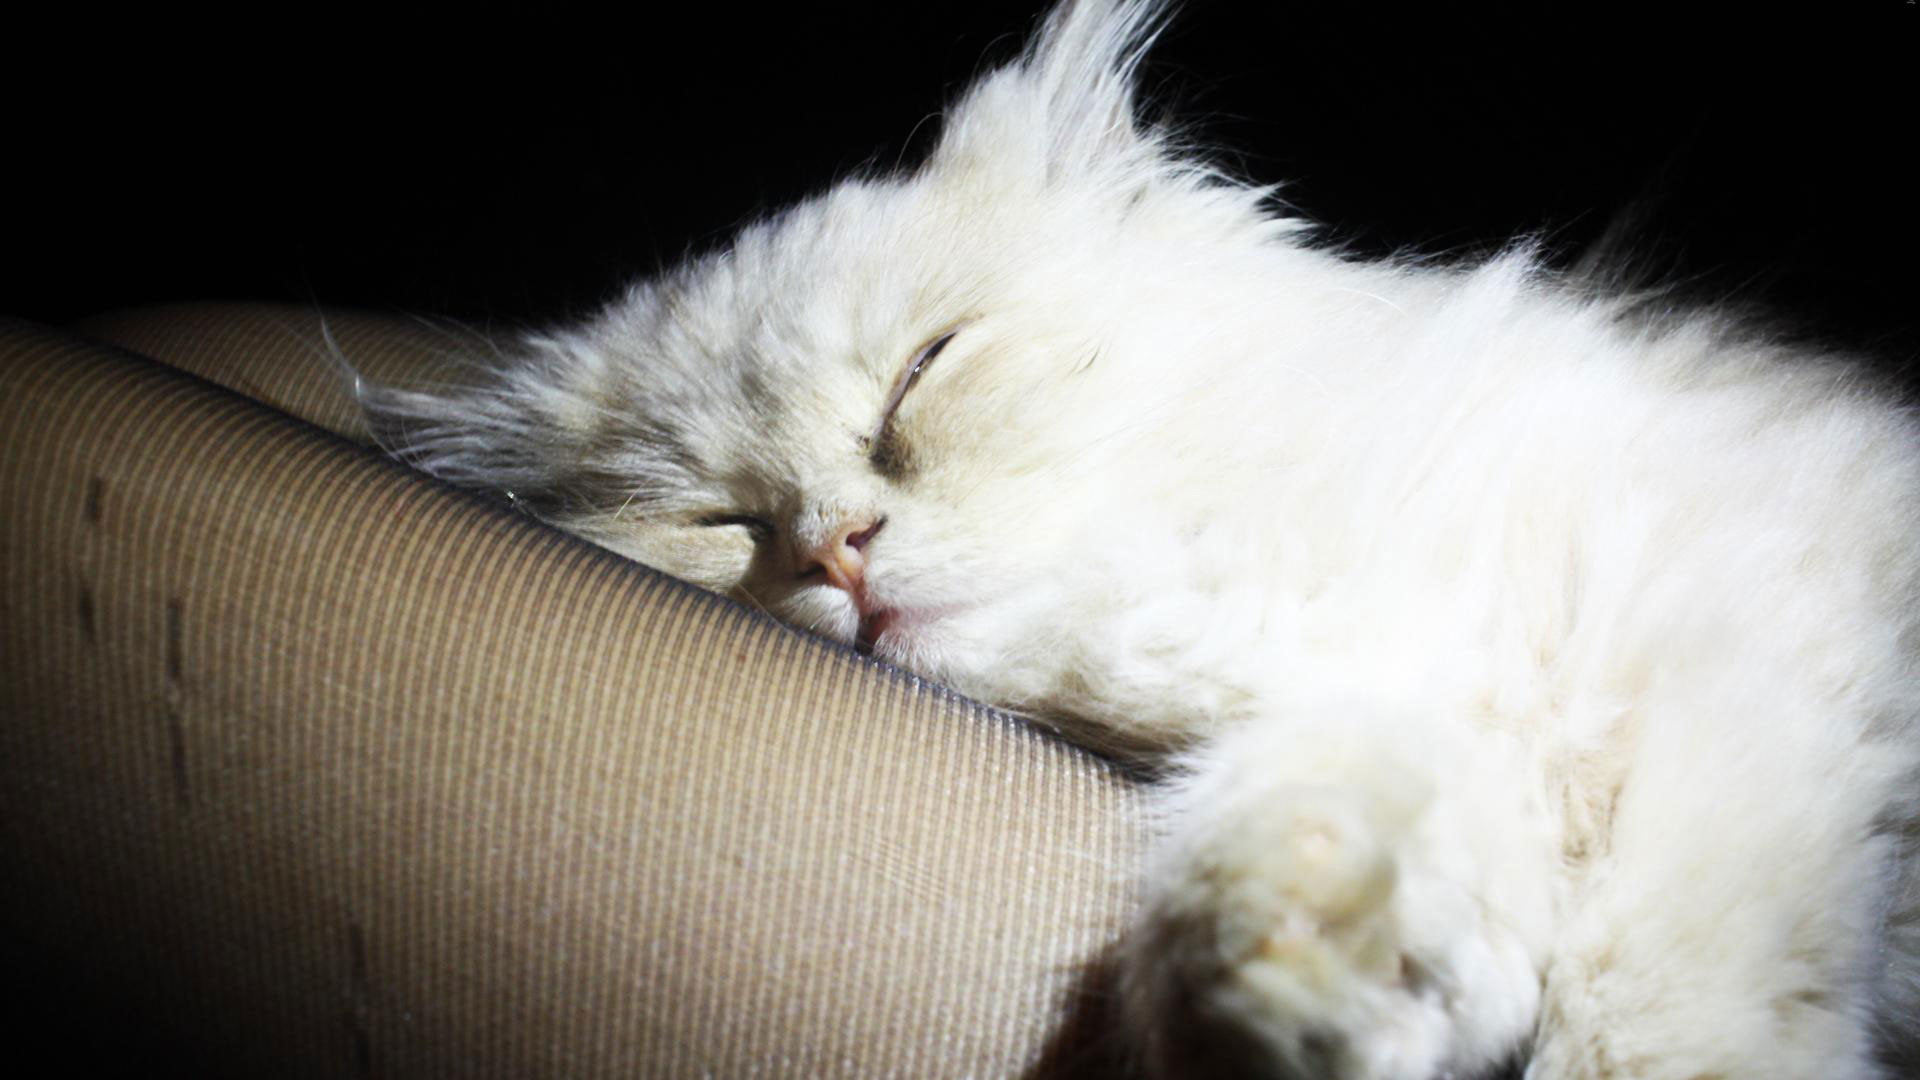 Hd pics photos cute white fluffy cat sleeping nice hd quality desktop background wallpaper